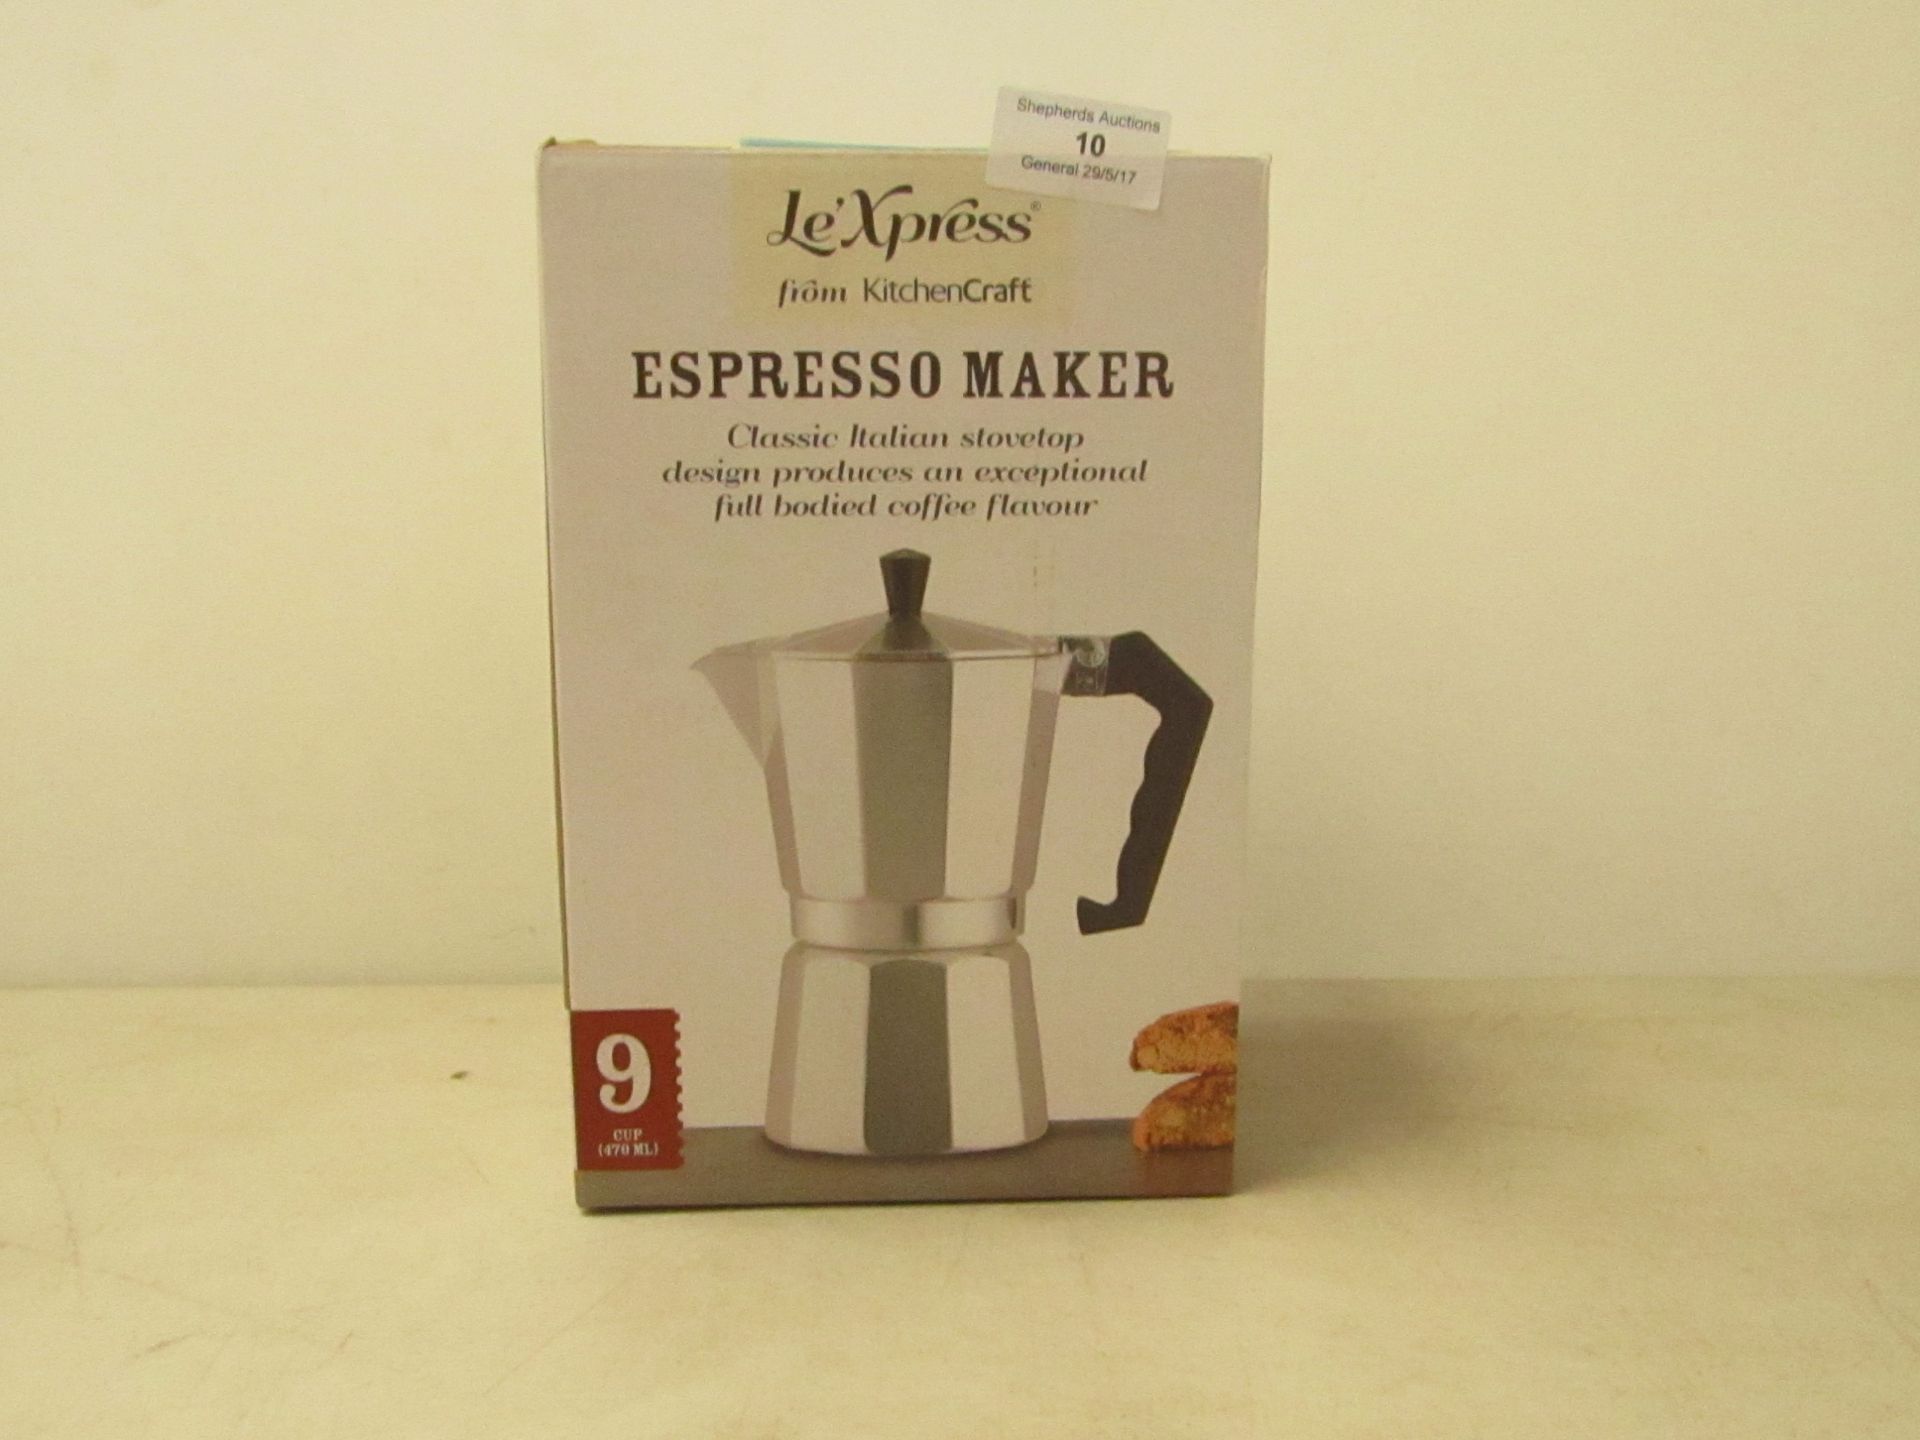 Le' Xpress espresso maker, unchecked and boxed.